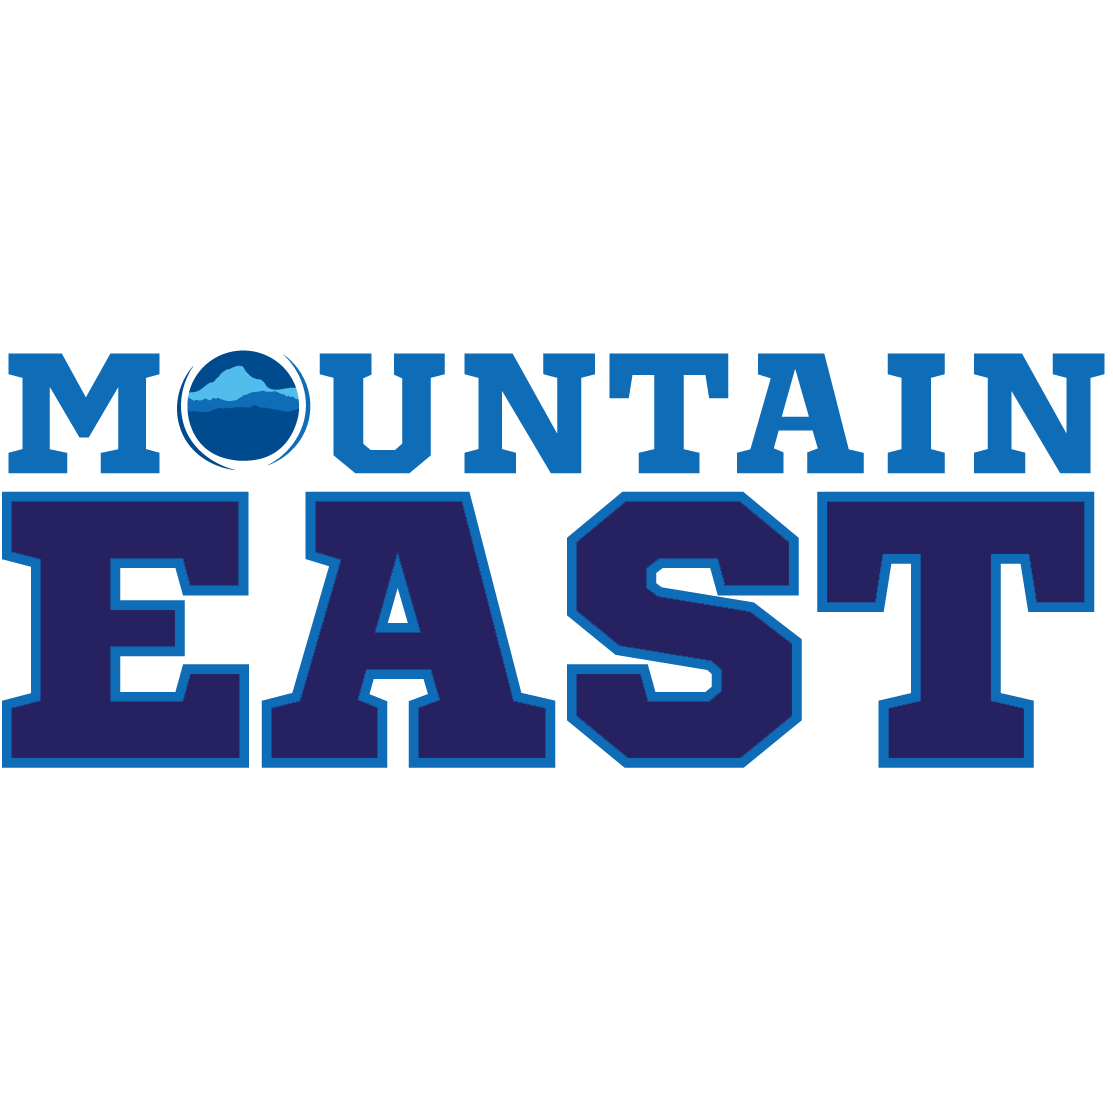 Mt content. West East Conferences logos. Facts logo.